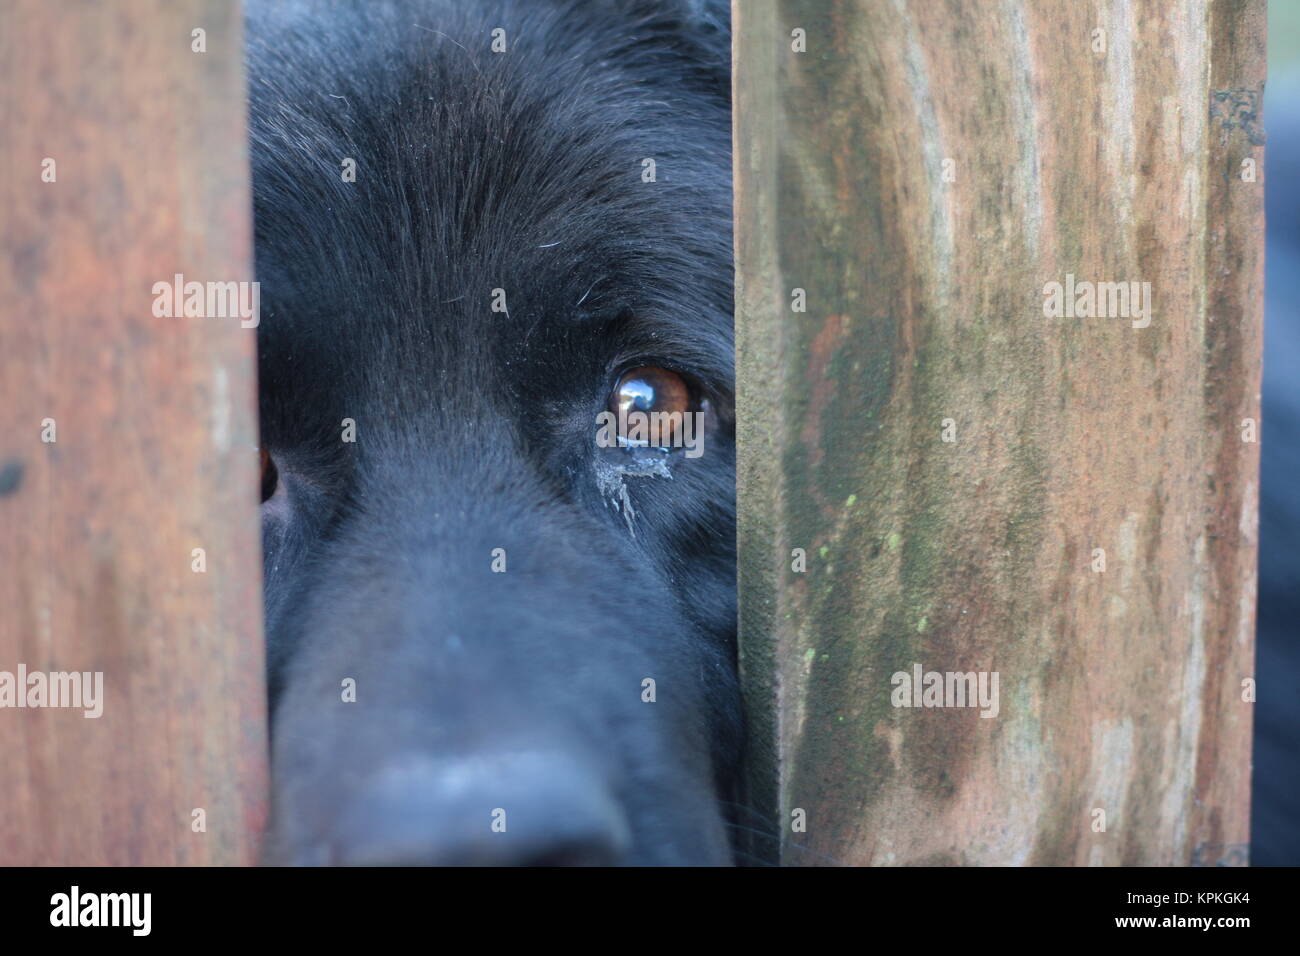 Sad black dog eyes between bars. Animal abuse concept. Stock Photo